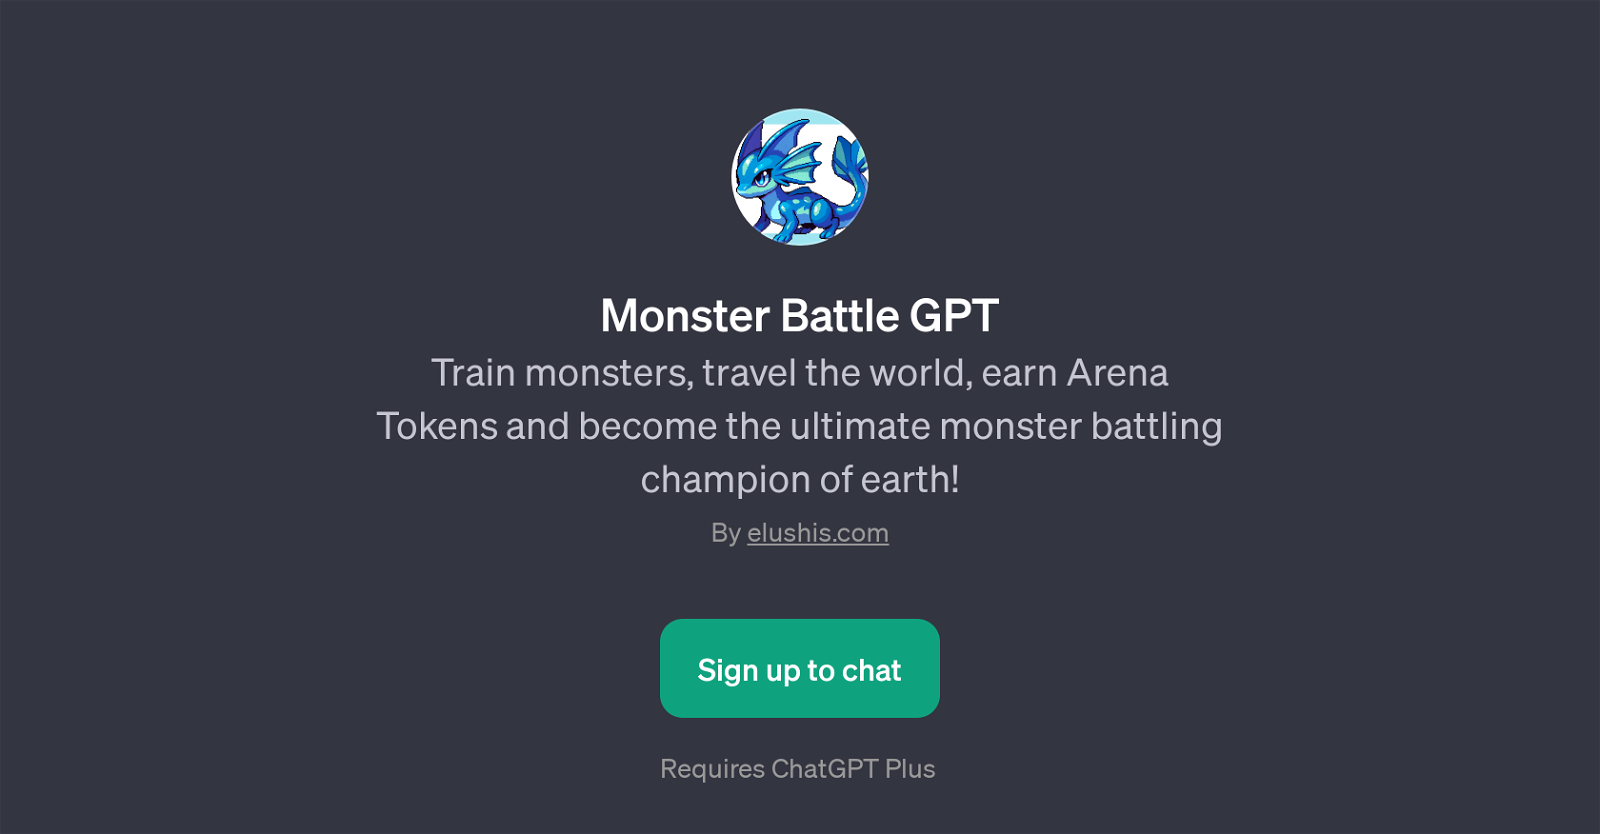 Monster Battle GPT website